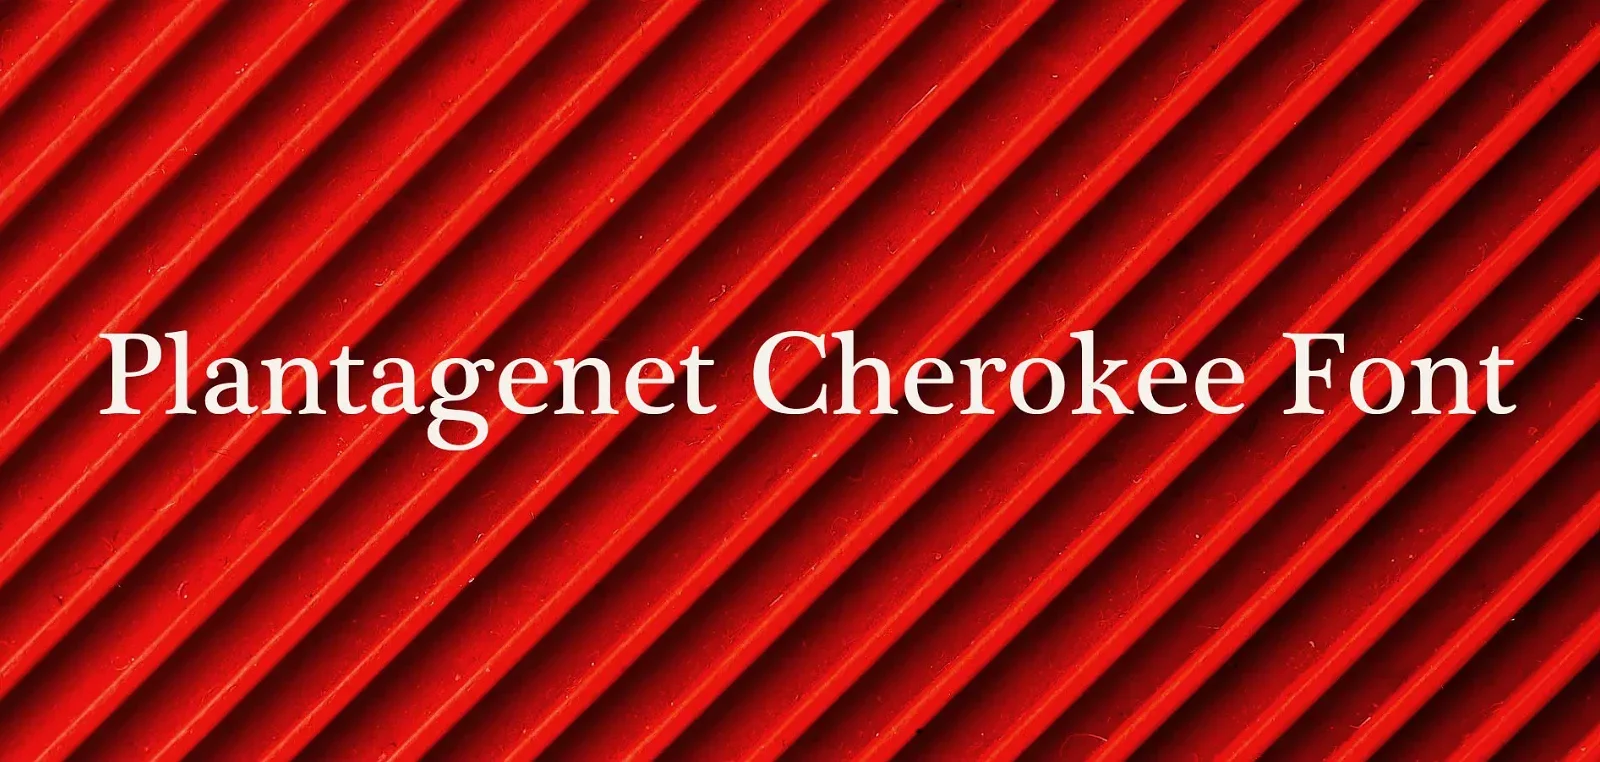 Plantagenet Cherokee Font